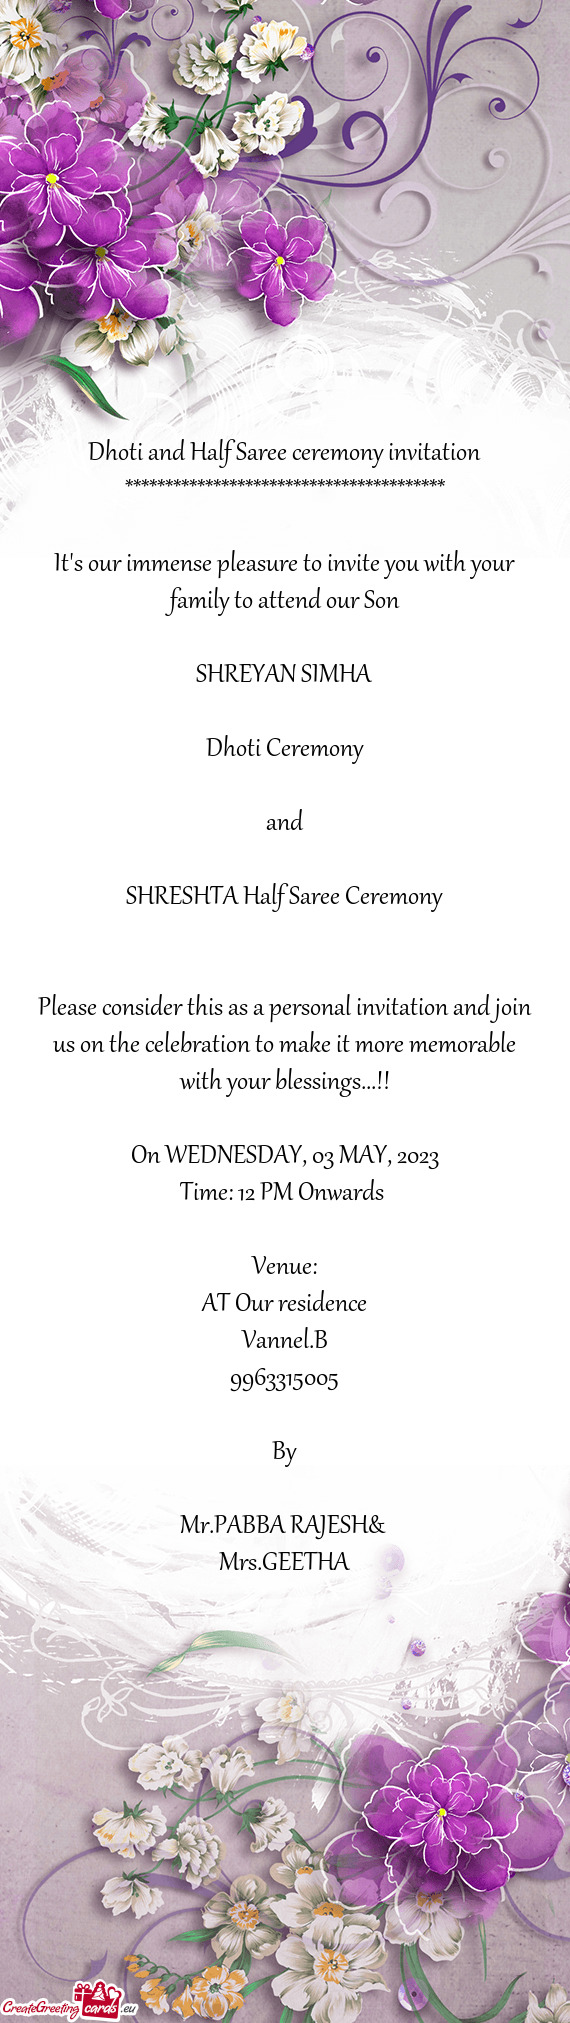 SHRESHTA Half Saree Ceremony